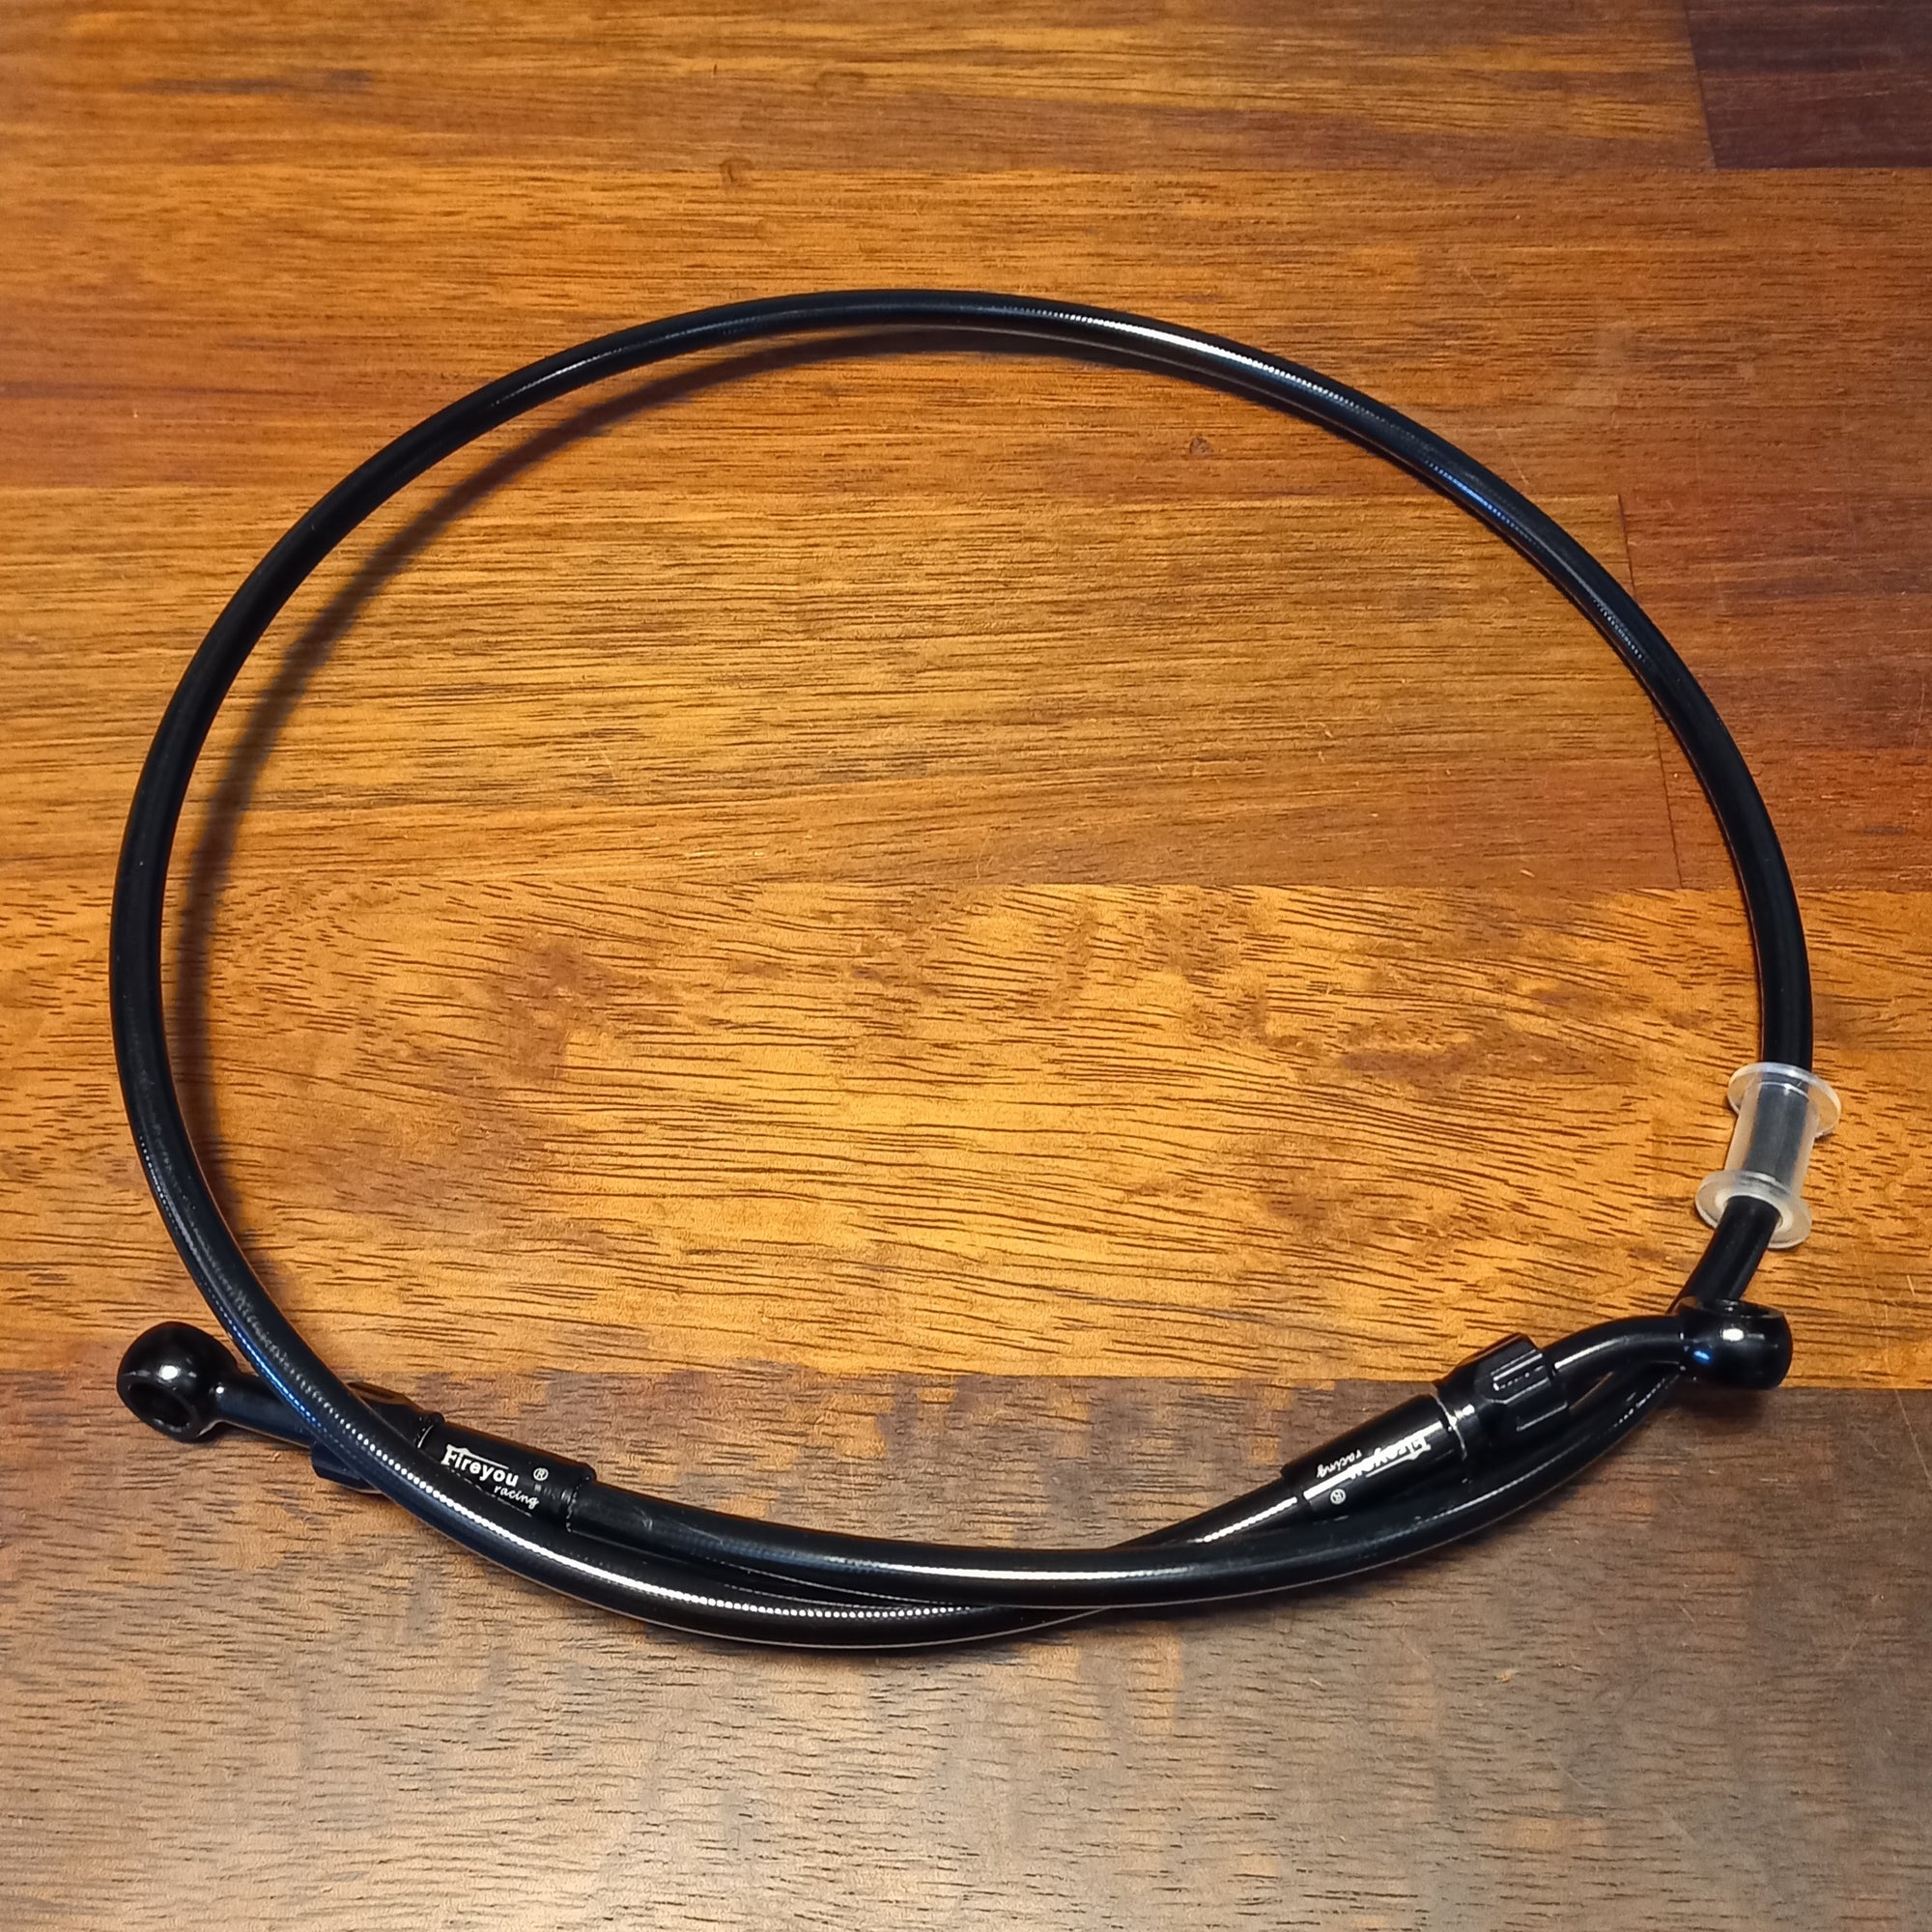 Yamaha xvs650 v-star cable kit extension